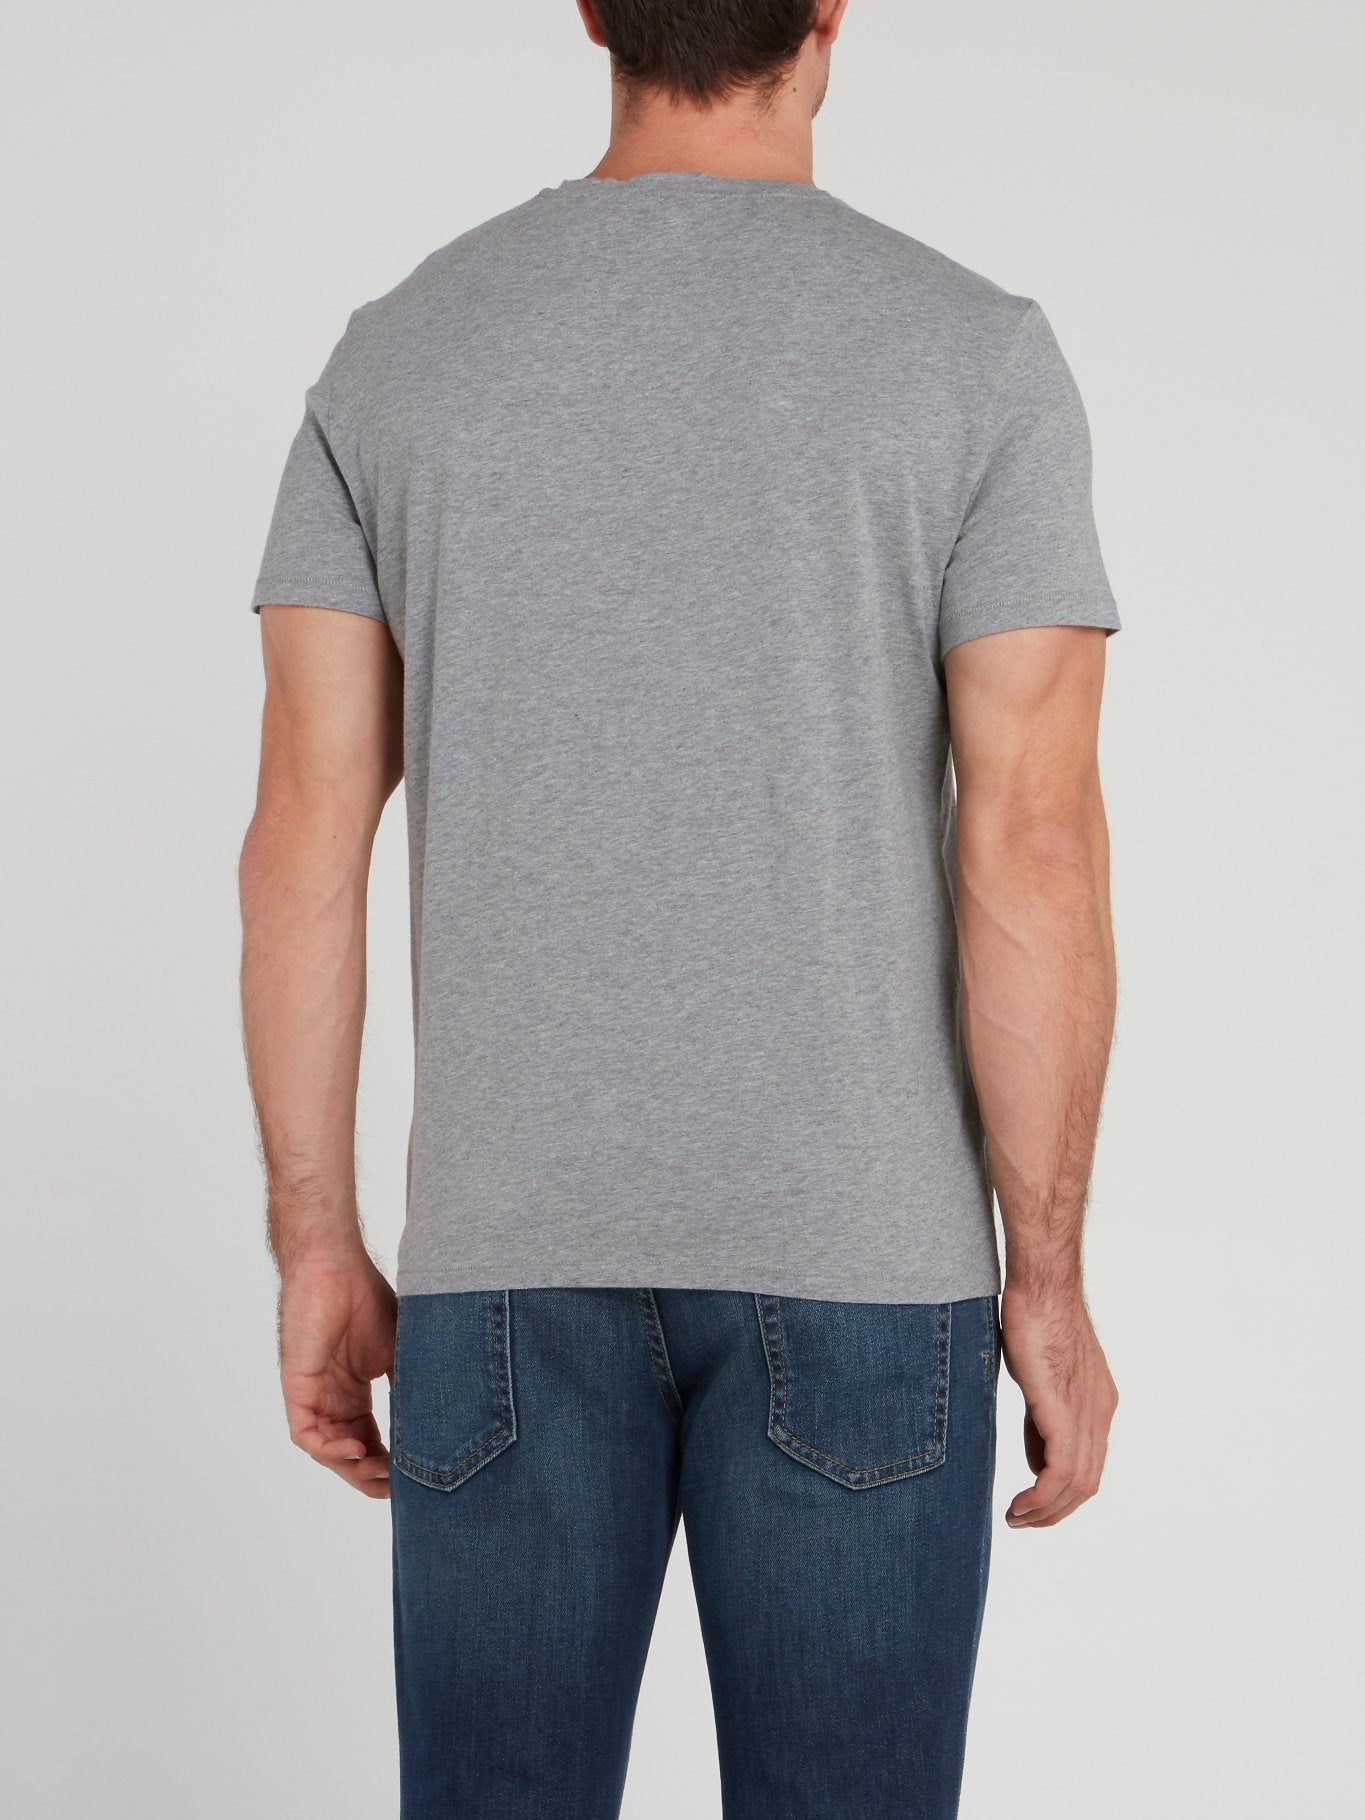 Grey Skull Print T-Shirt